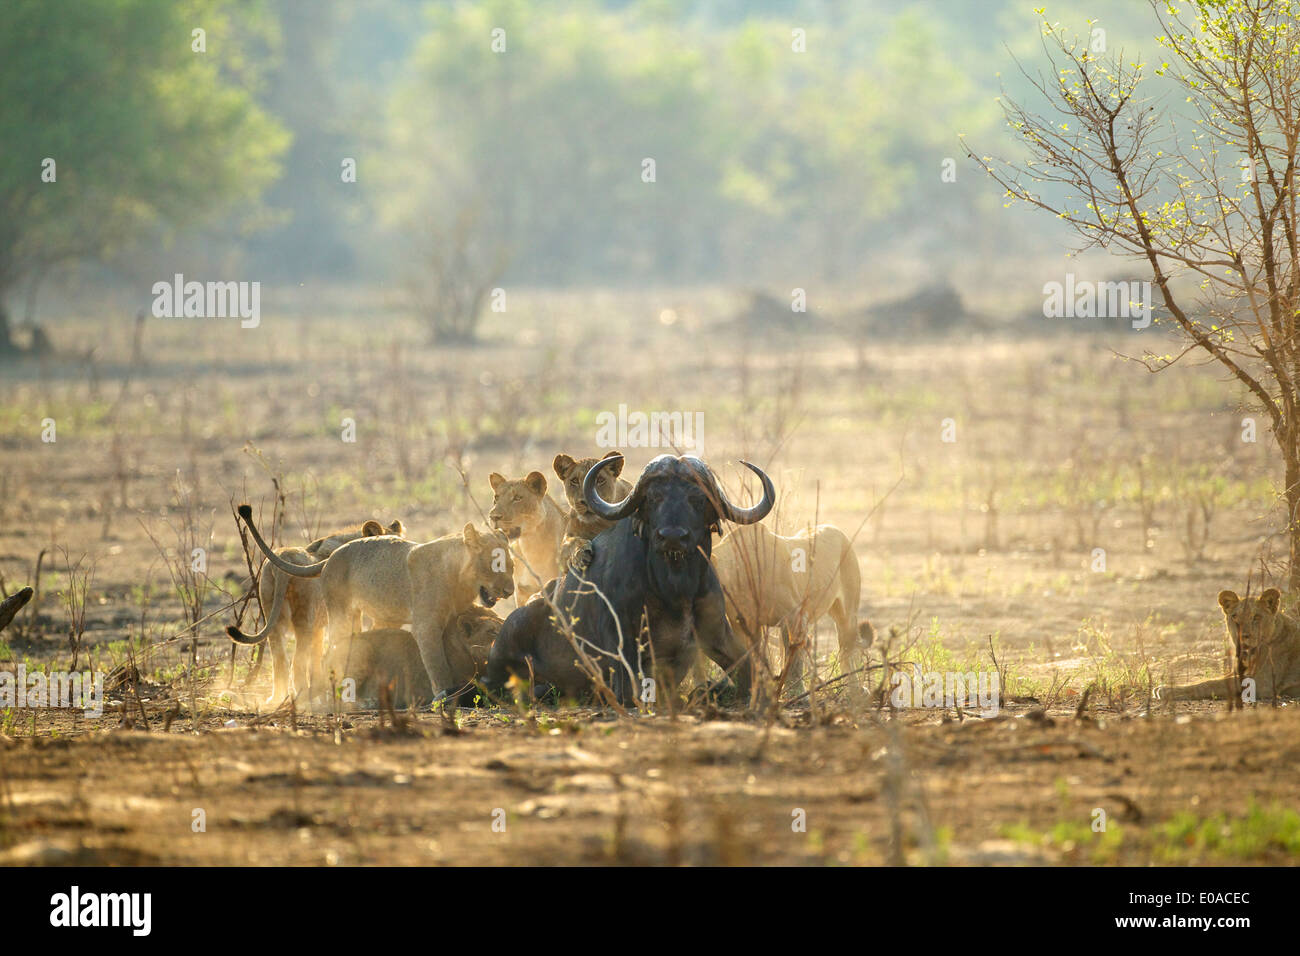 Lions - Panthera leo - attacking a buffalo - Syncerus caffer Stock Photo